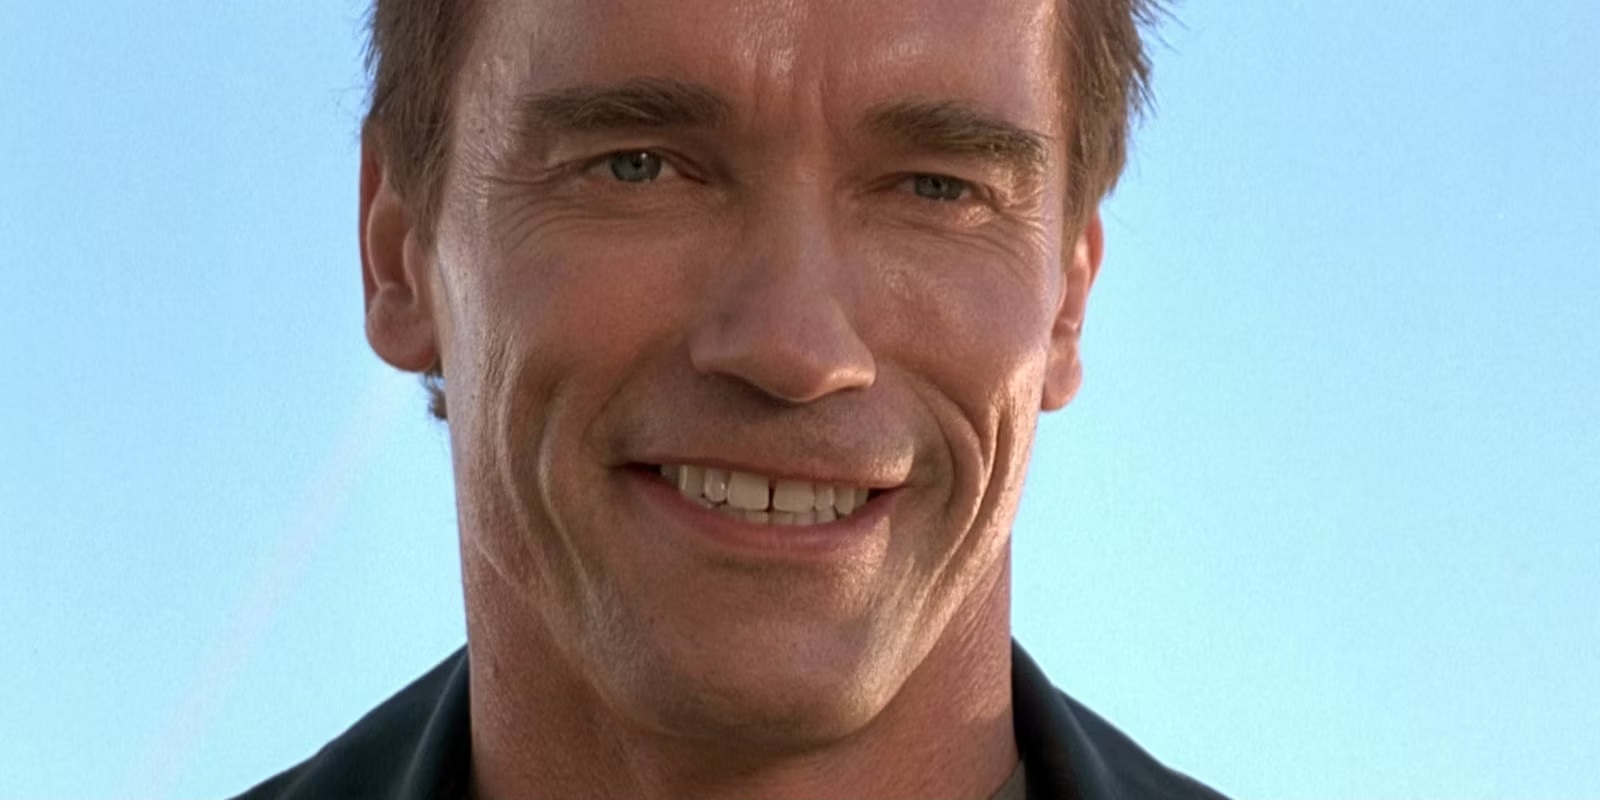 Arnold smile Blank Meme Template